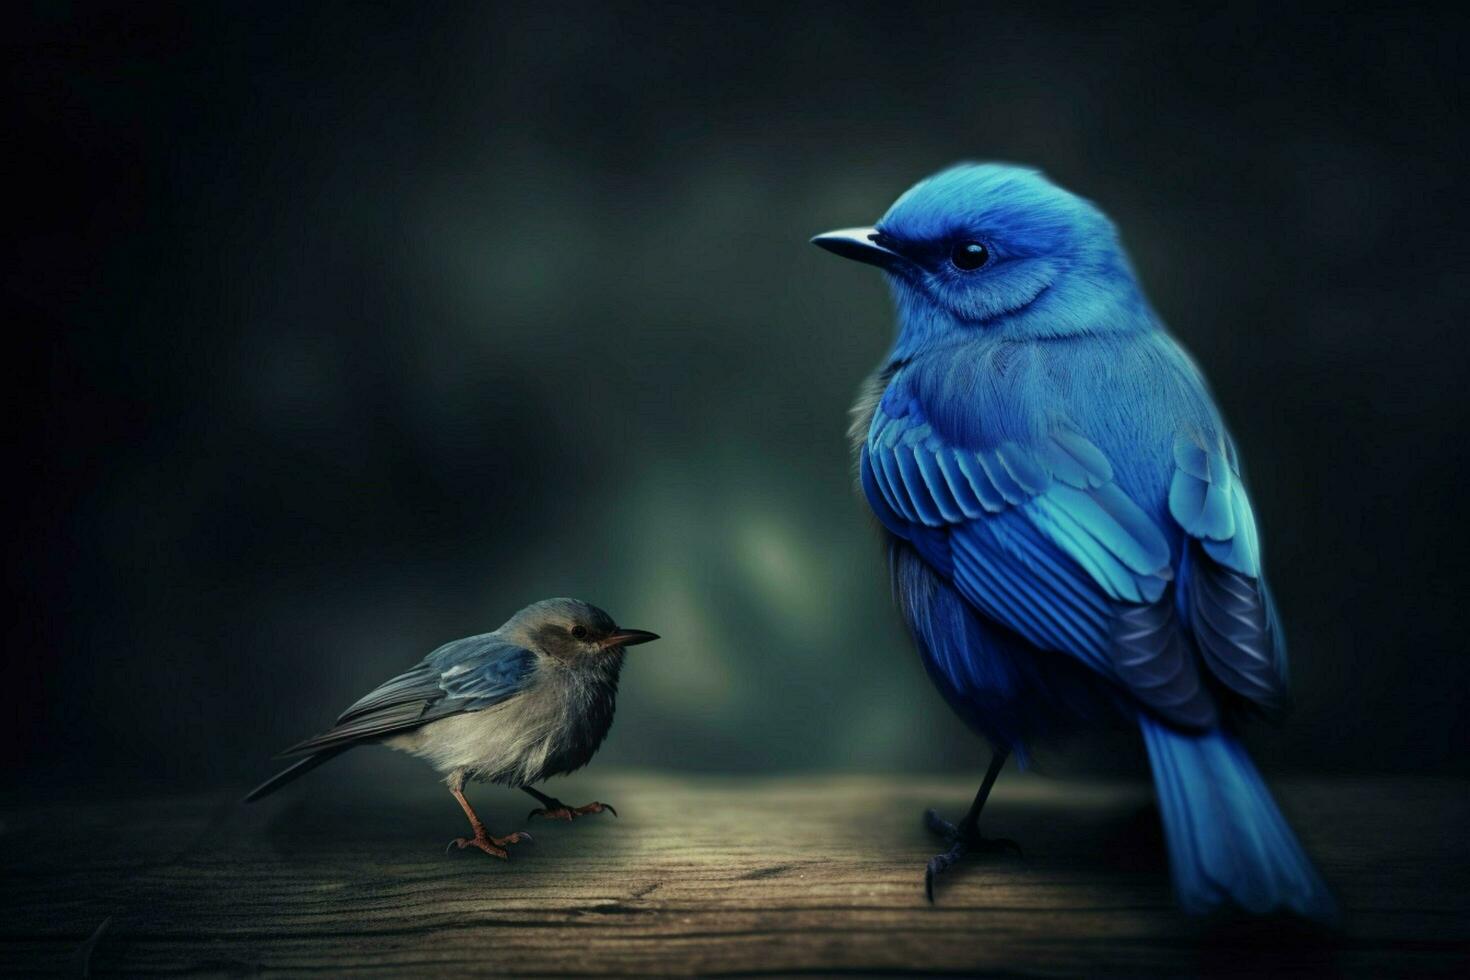 a blue bird with a blue bird on its back photo